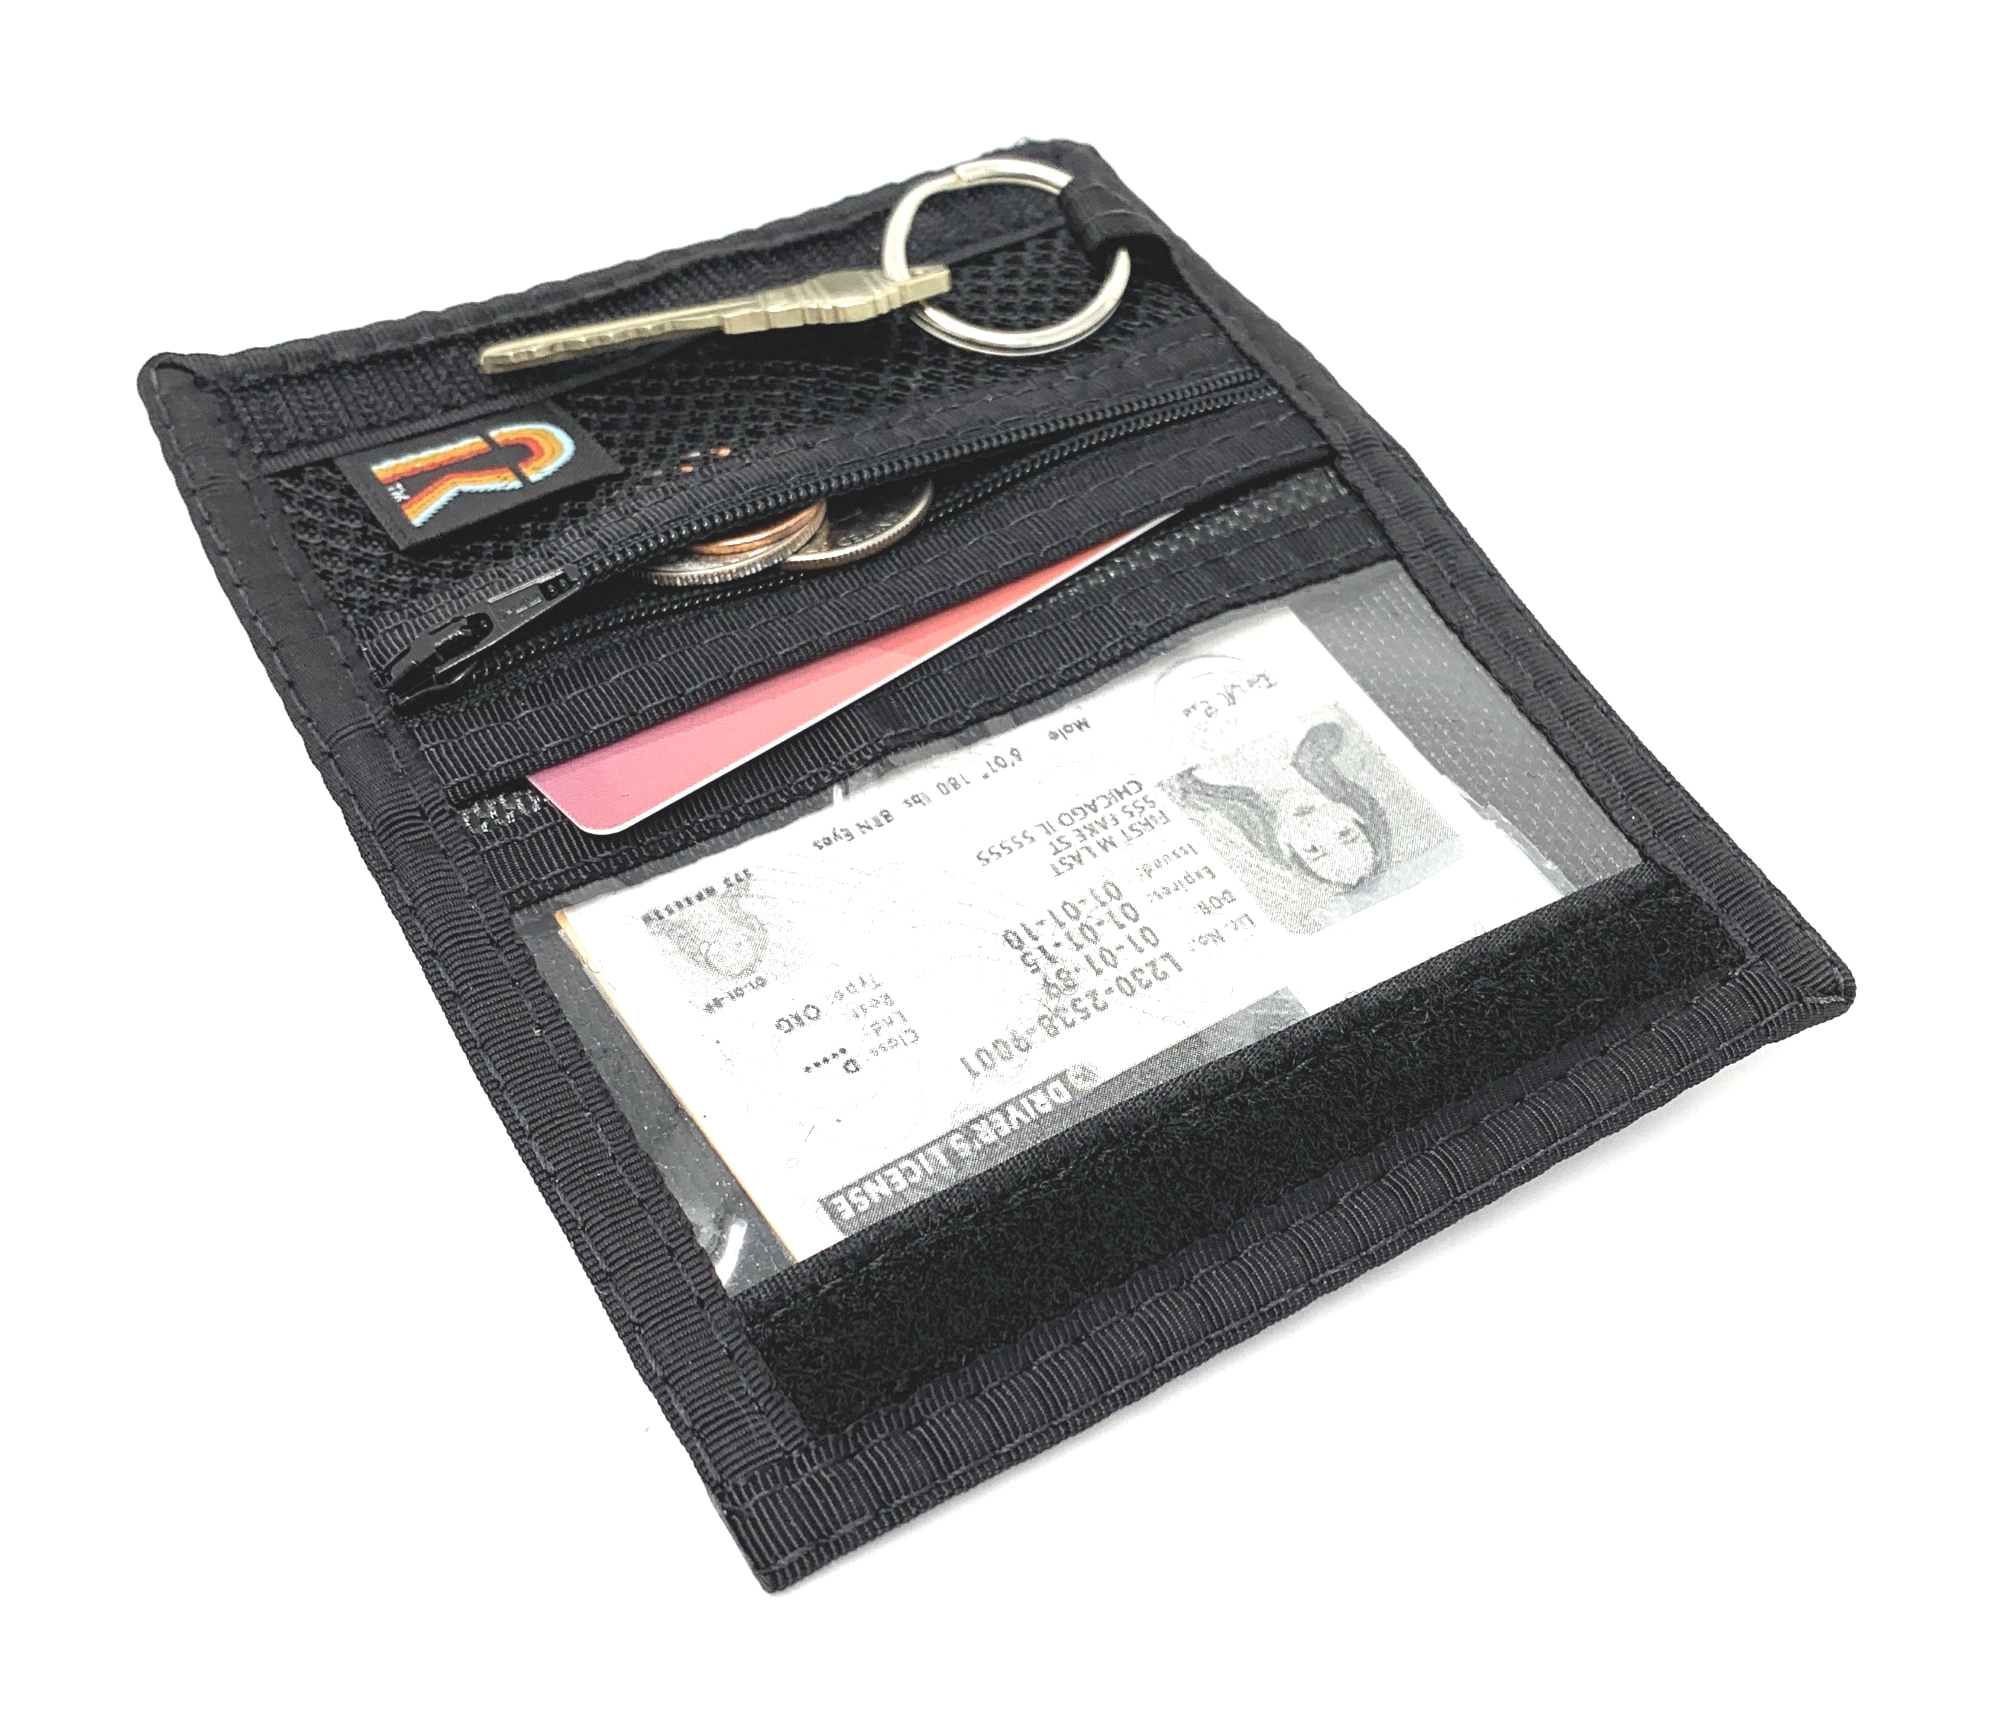 Exterior: Silt PocketNumber Of Handles/Straps: Two/OneInterior:  Cell Phone Pocket, Interior Zipper Pocket, Inter…